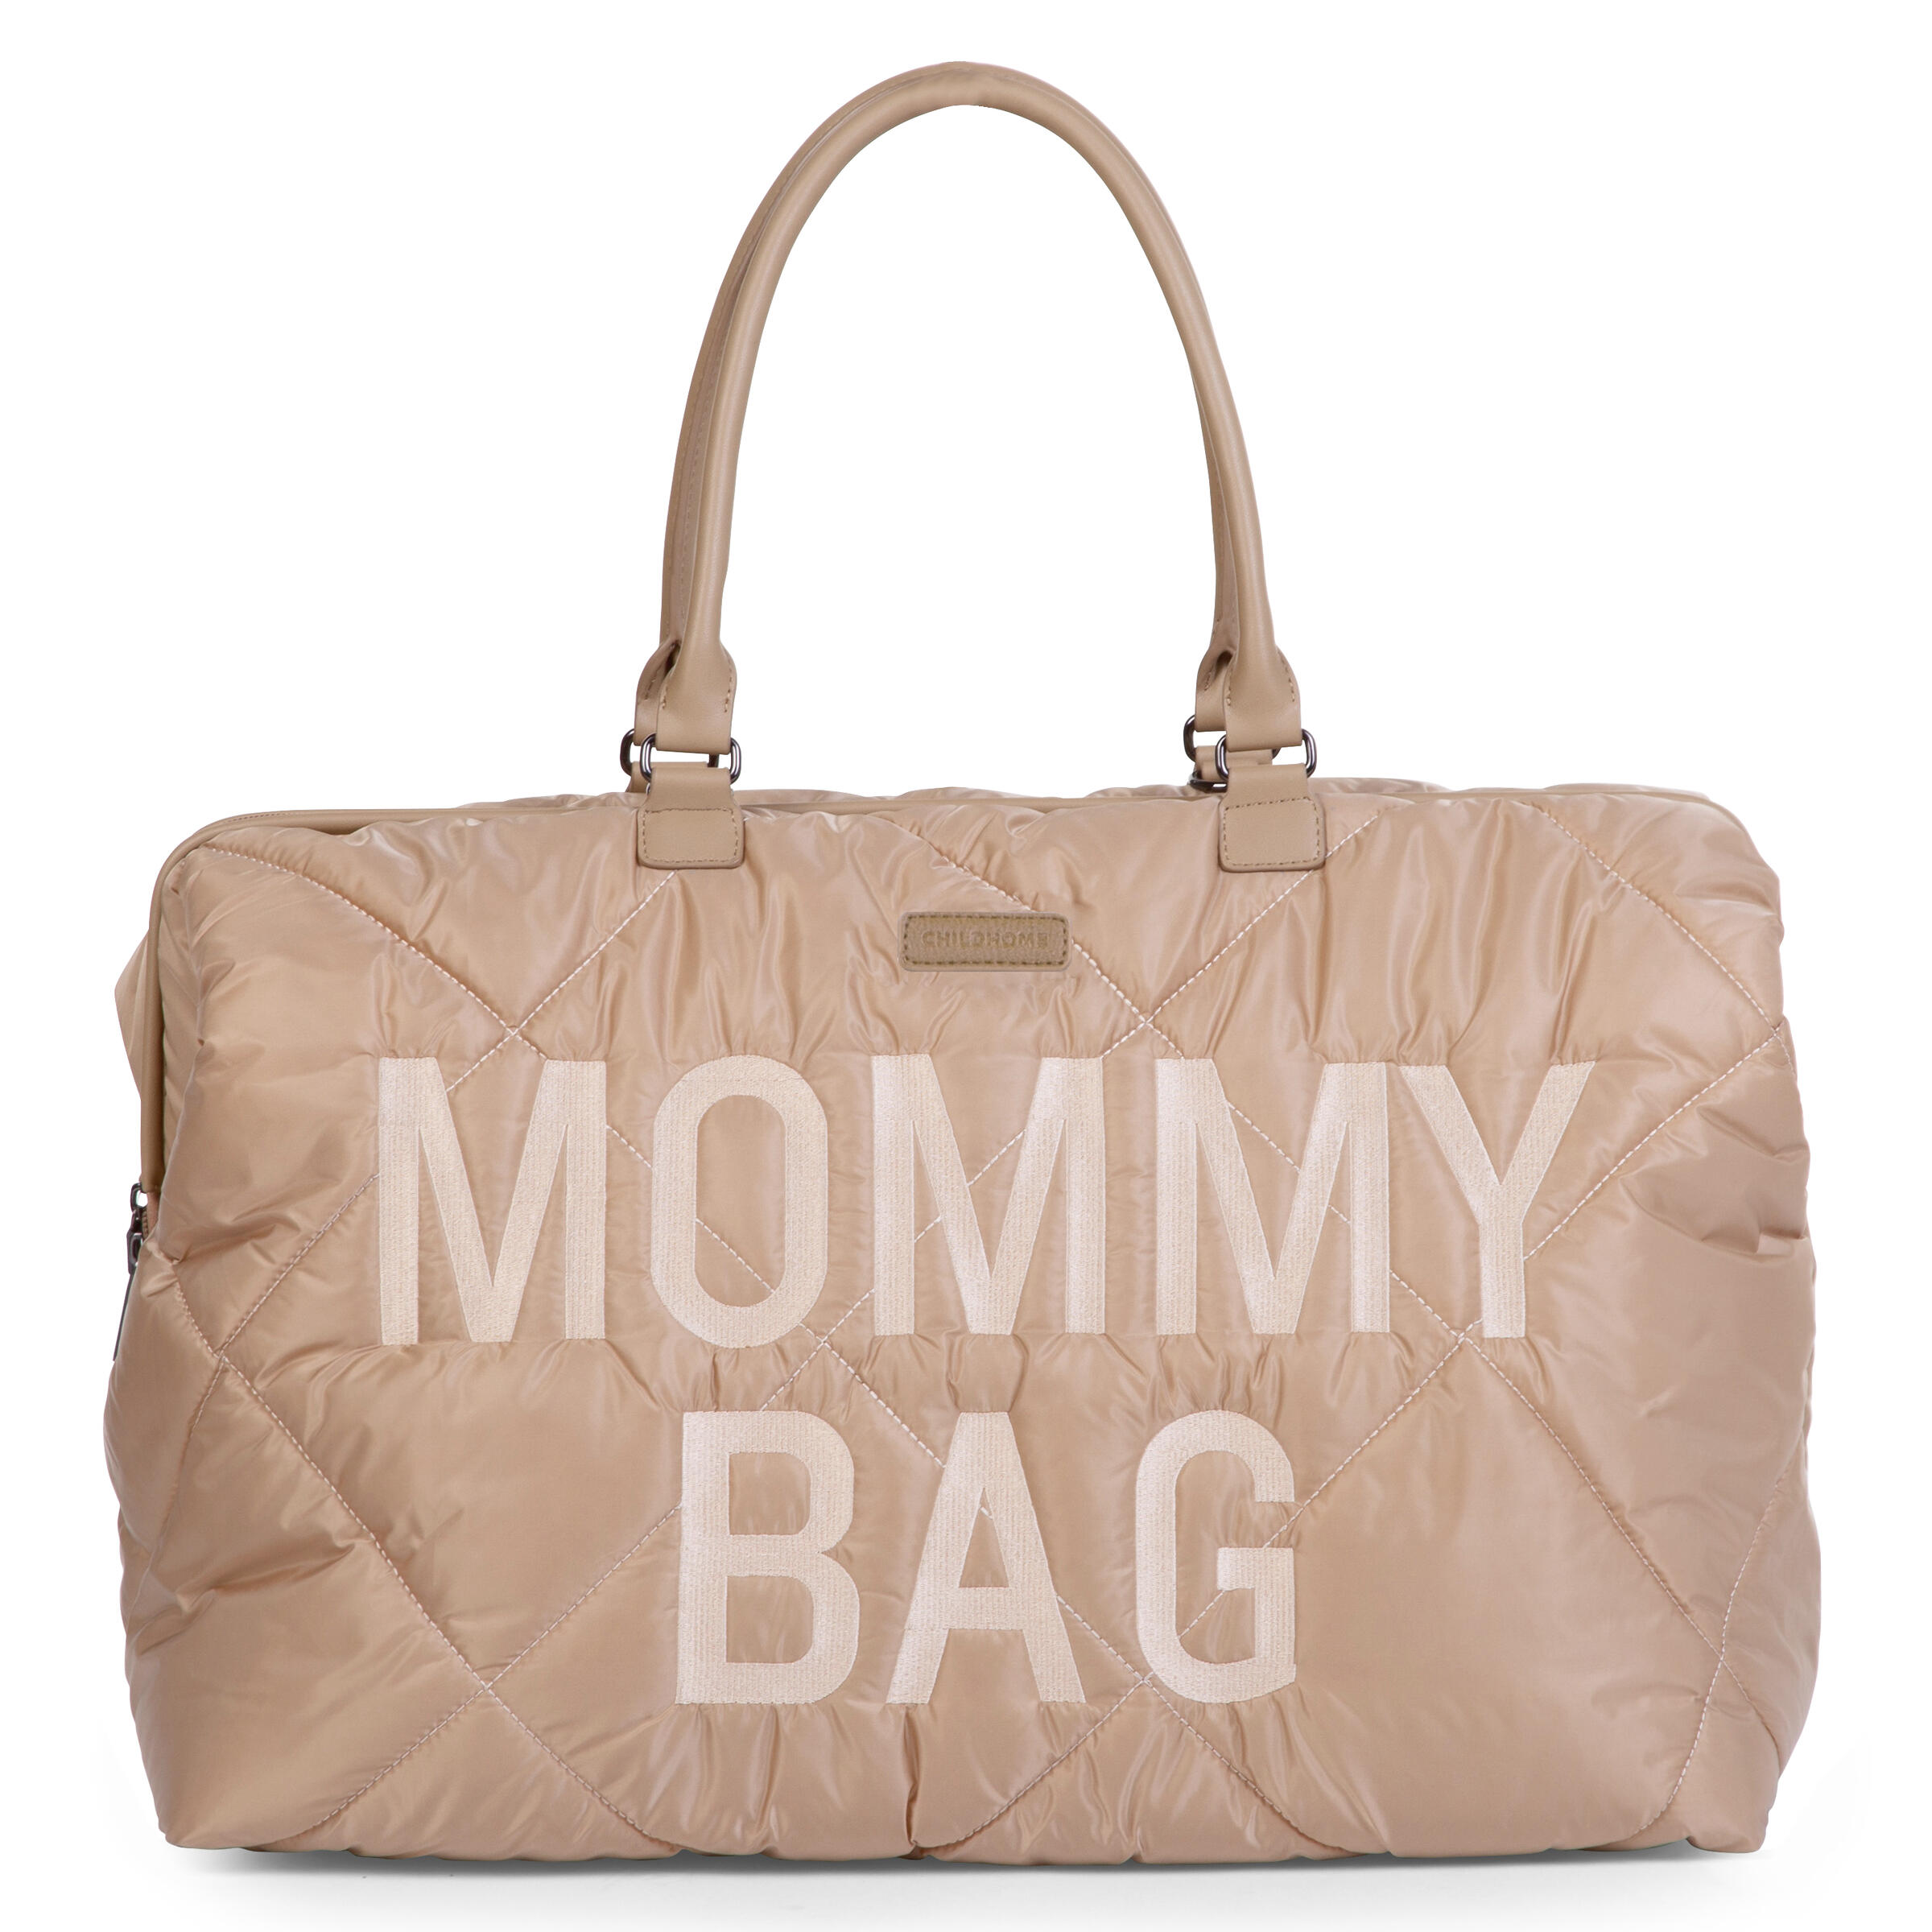 Mommy Bag Sac A Langer - Matelassé - Beige